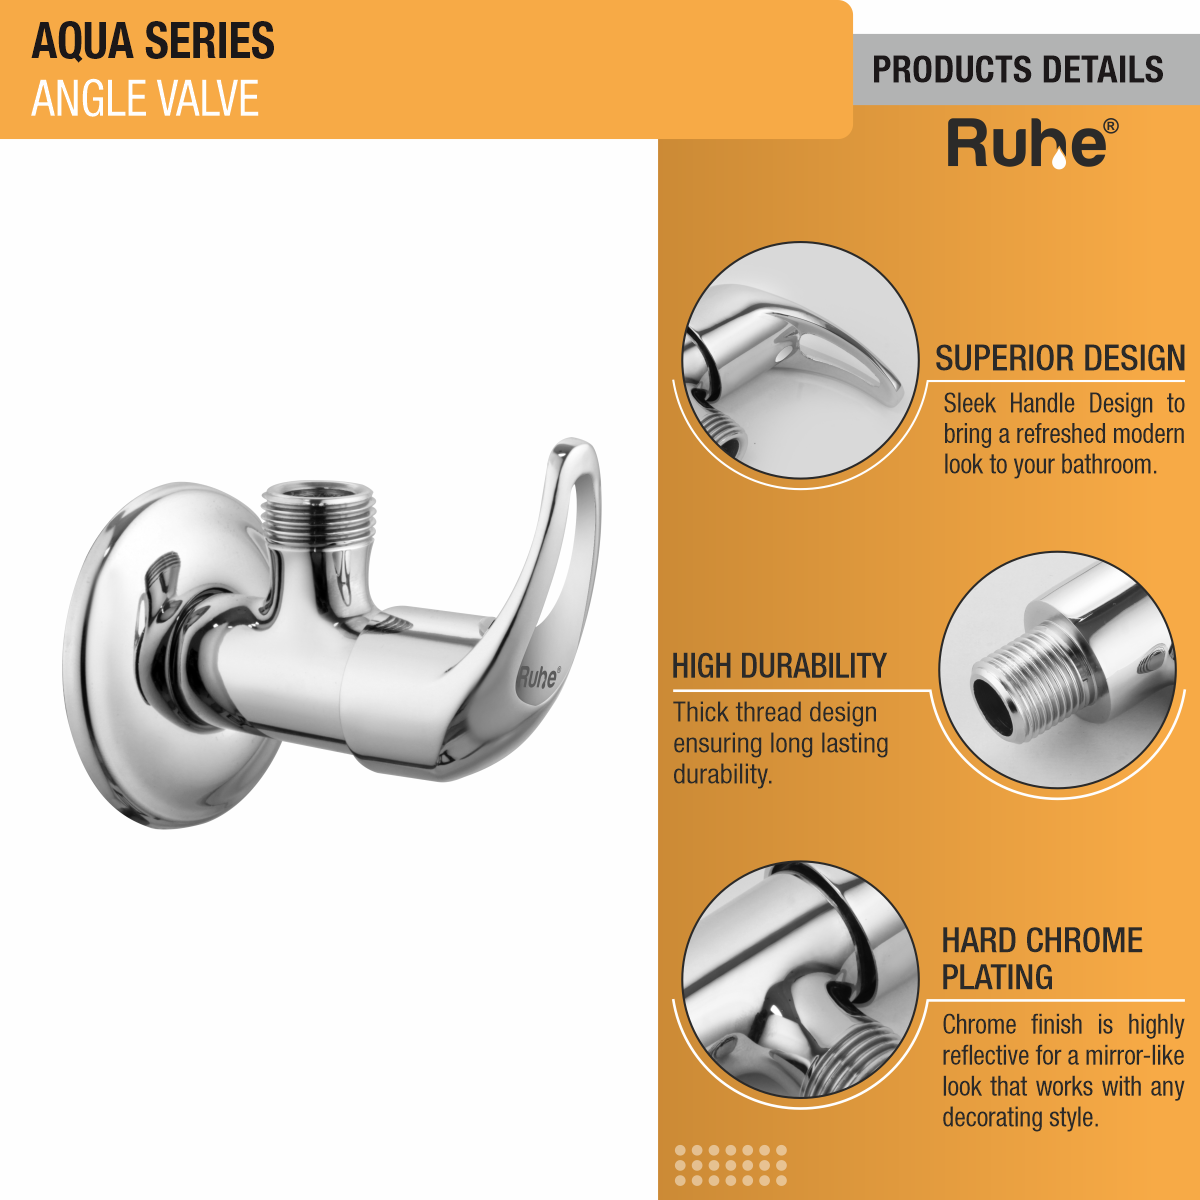 Aqua Angle Valve Brass Faucet product details